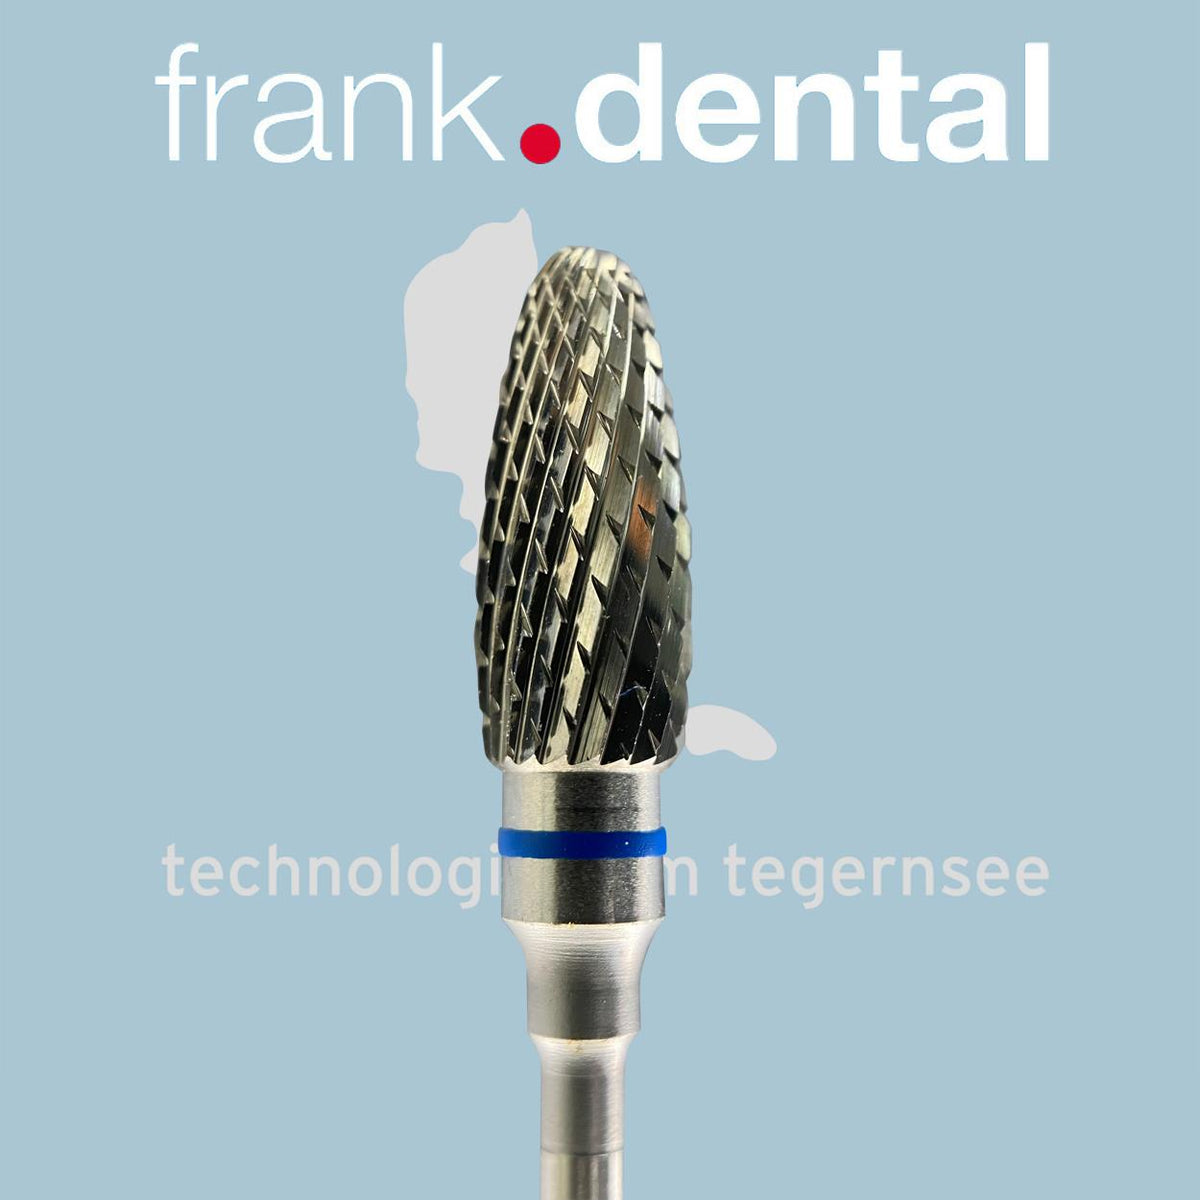 DentrealStore - Frank Dental Tungsten Carpide Monster Hard Burs - 251K